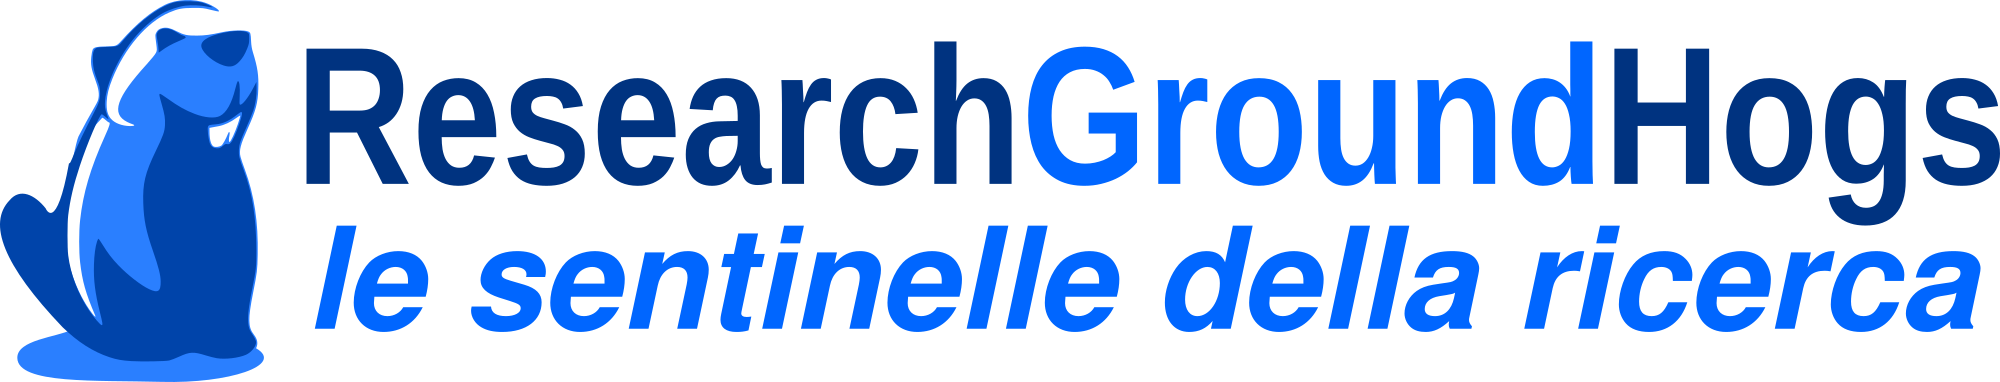 Logo perResearch groundhogs